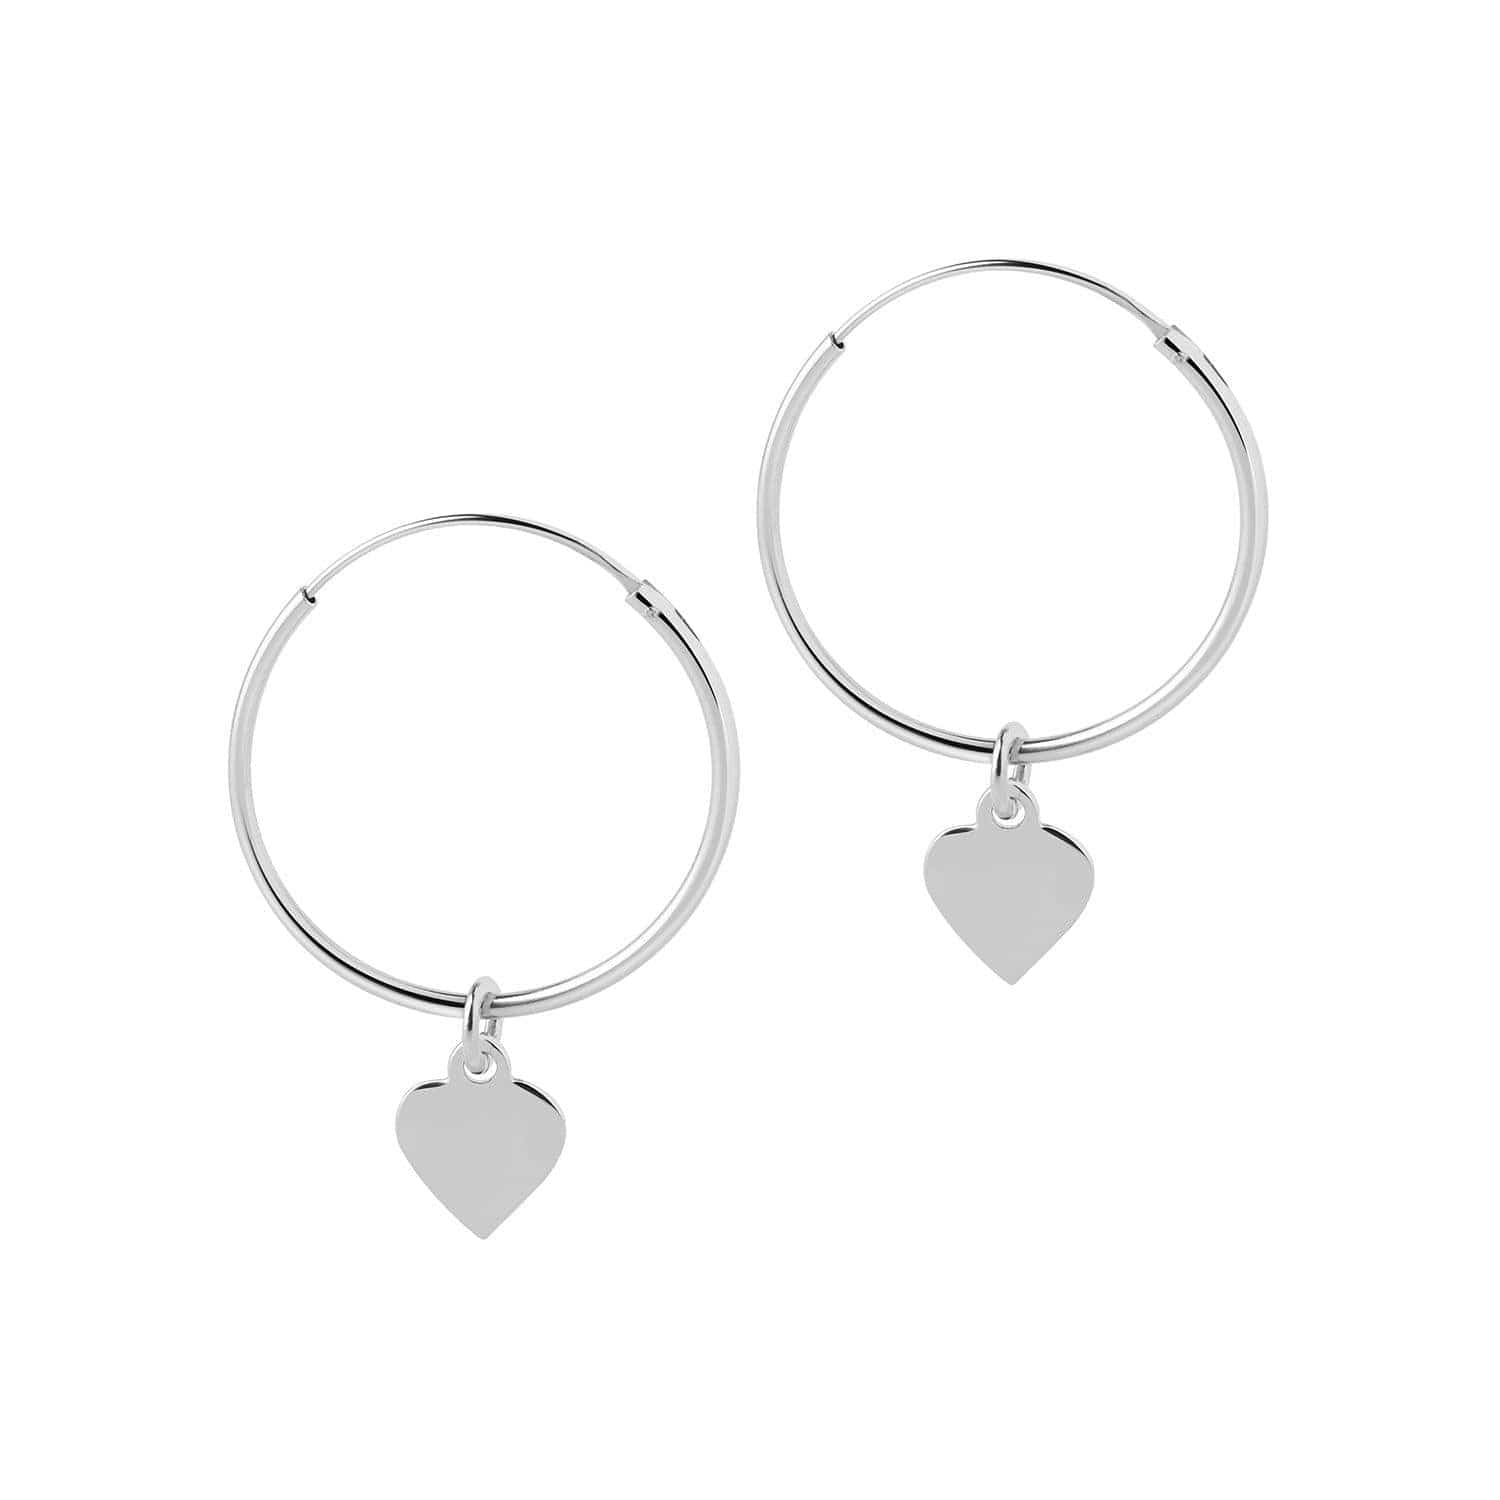 Hoop Earrings with Pendant Heart Silver 22 MM